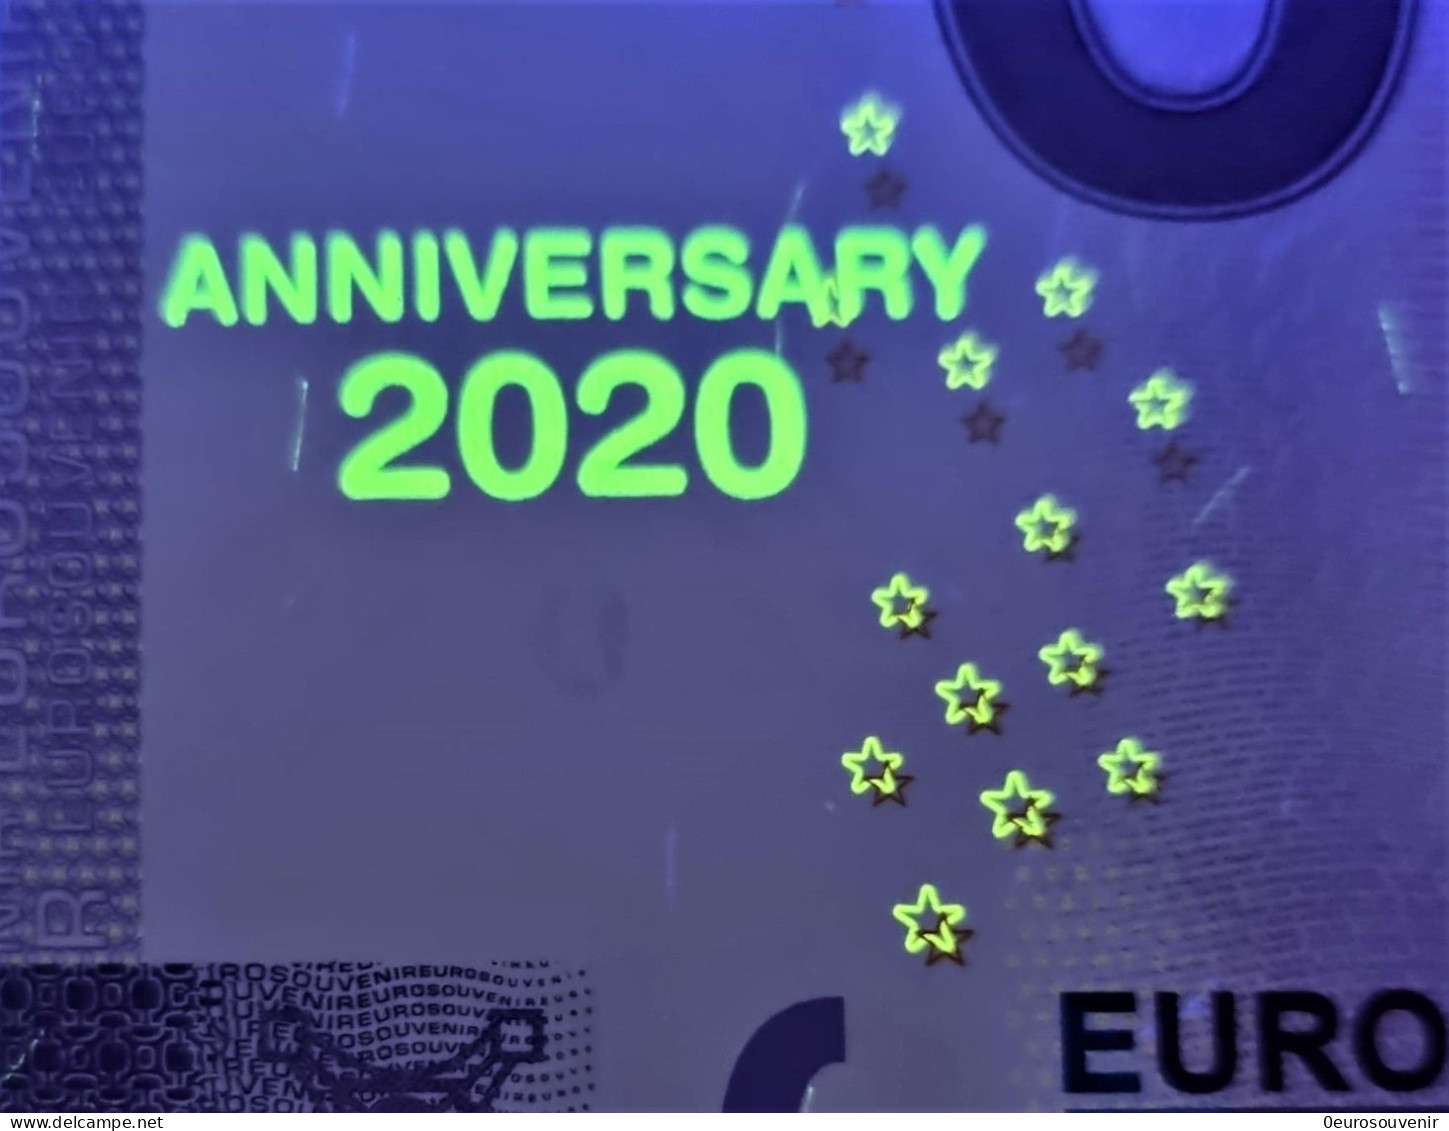 0-Euro XEAF 2022-4 KUNSTHALLE - BIELEFELD Set NORMAL+ANNIVERSARY - Pruebas Privadas